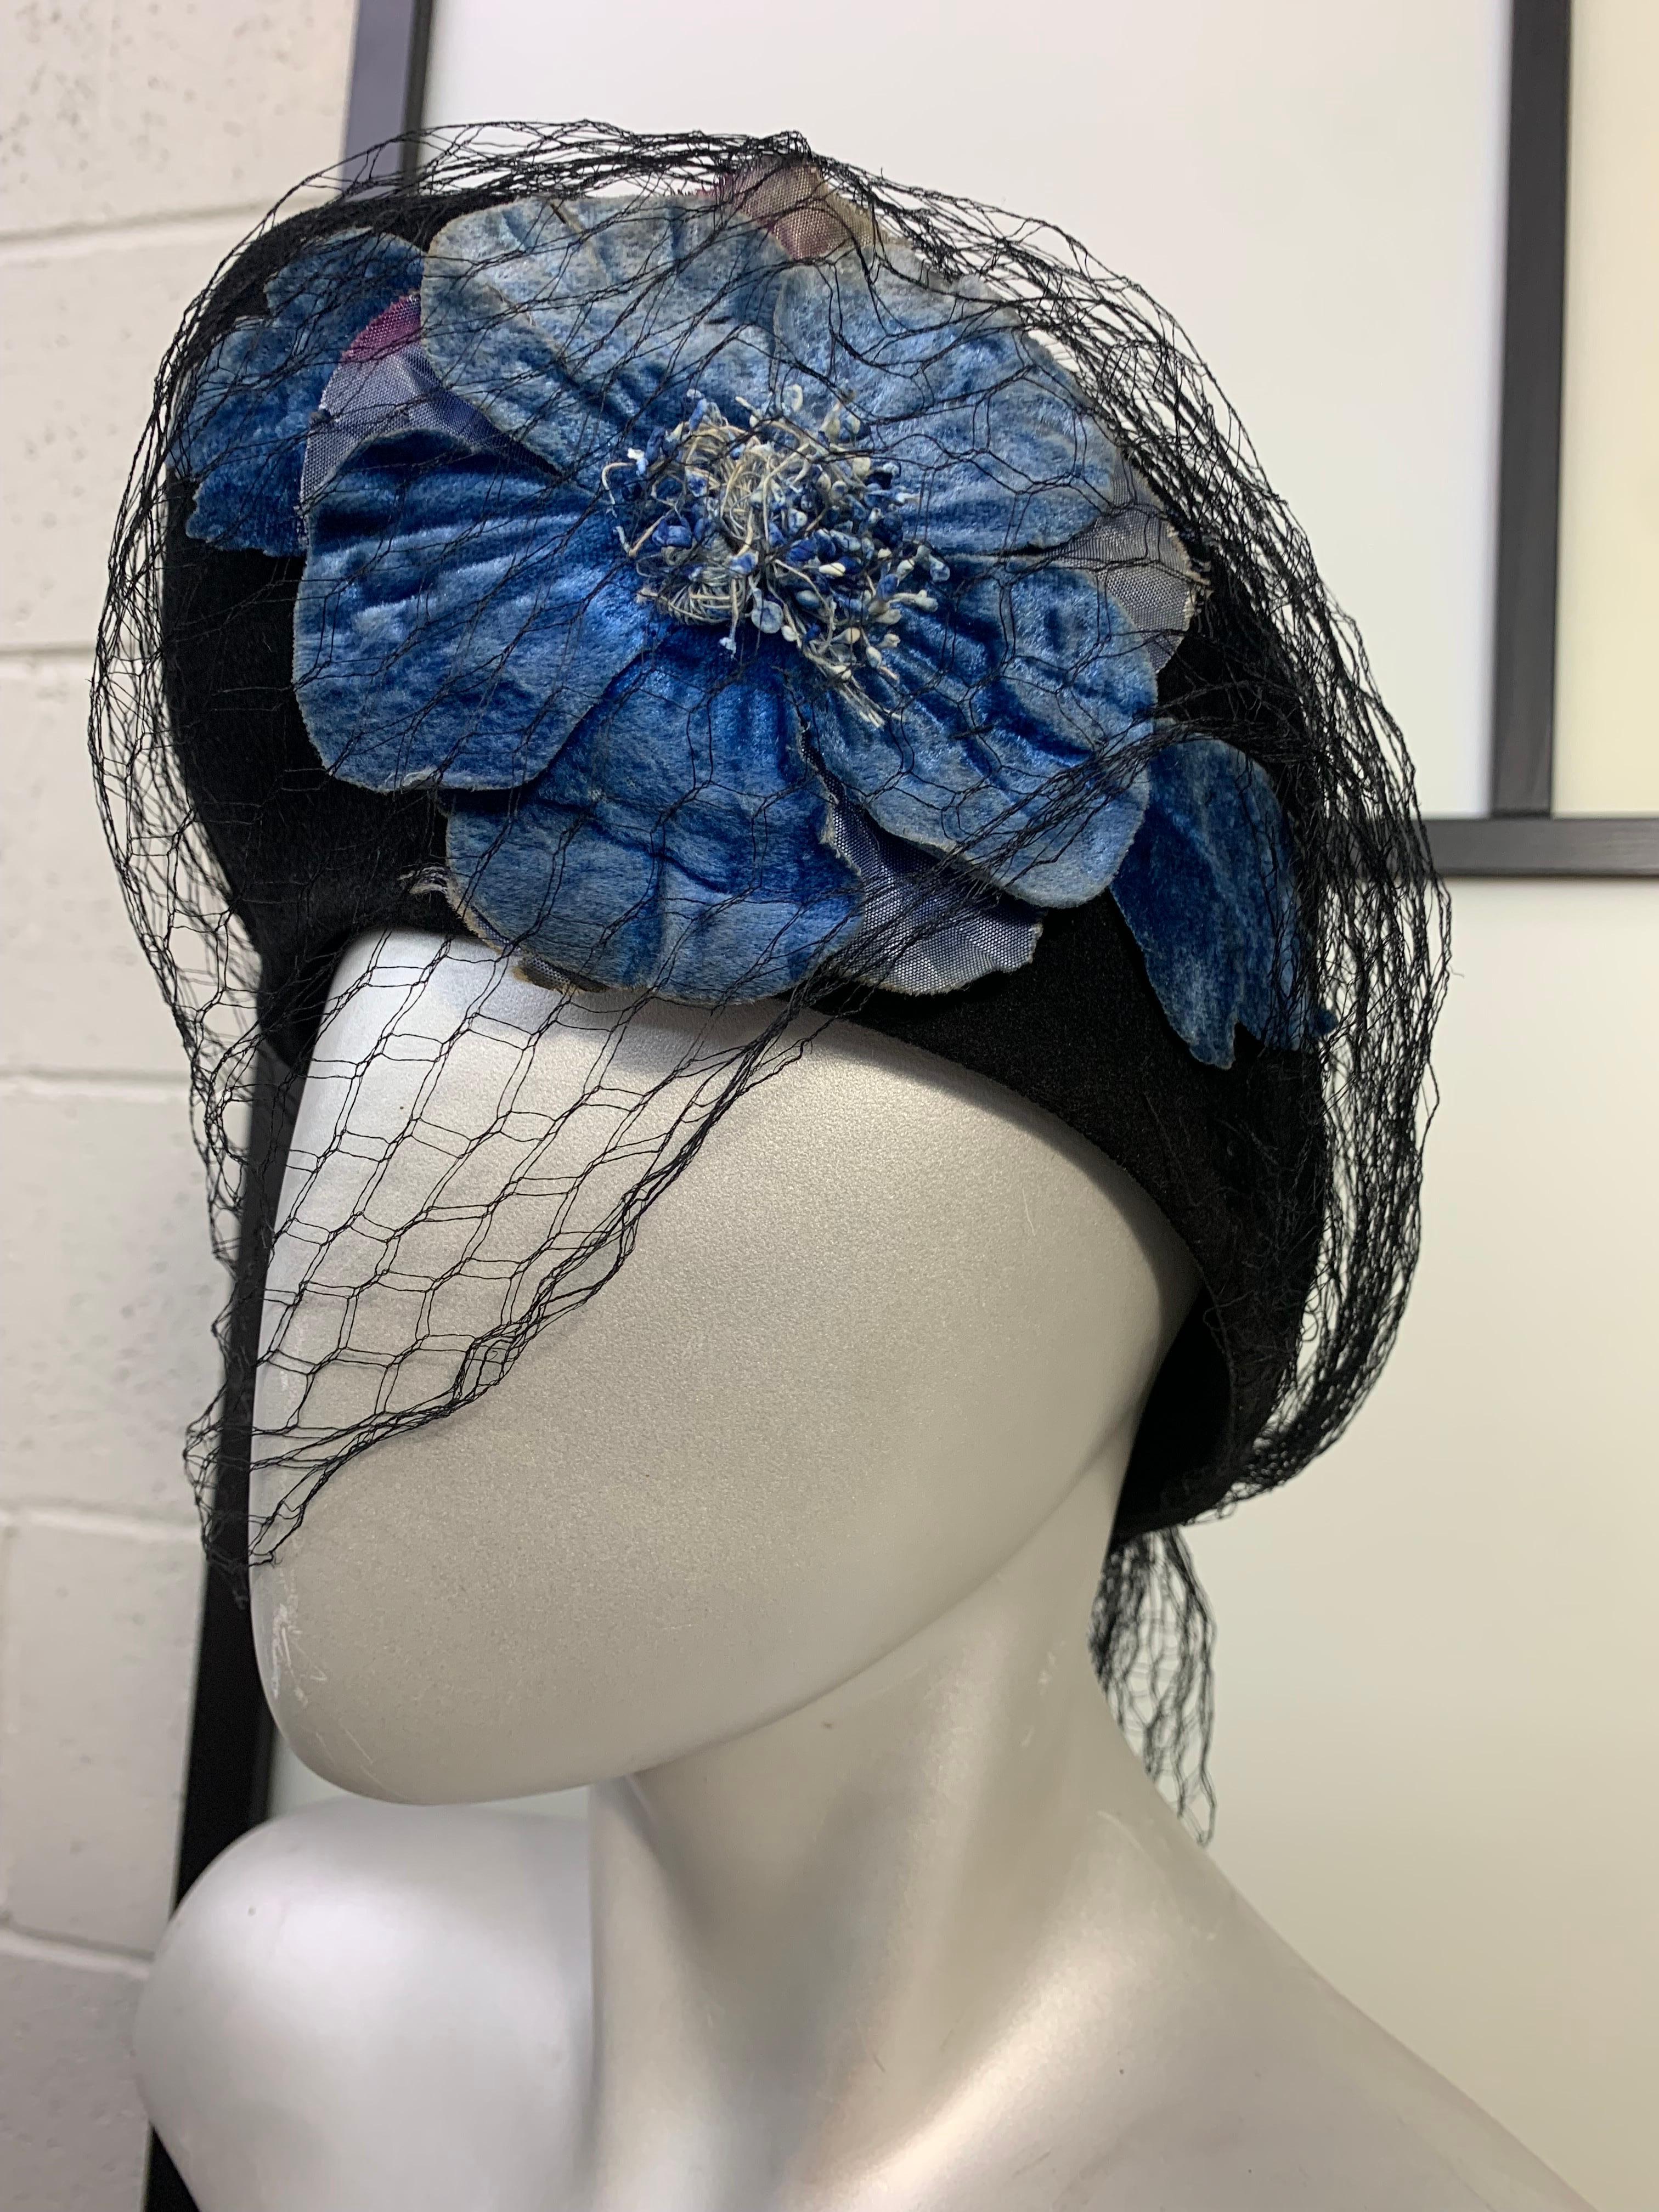 1940s Black Felt Peaked-Front Hat w Large Sapphire Blue Velvet Flower & Netting: Union label inside, no maker. Fits up to size 22. 